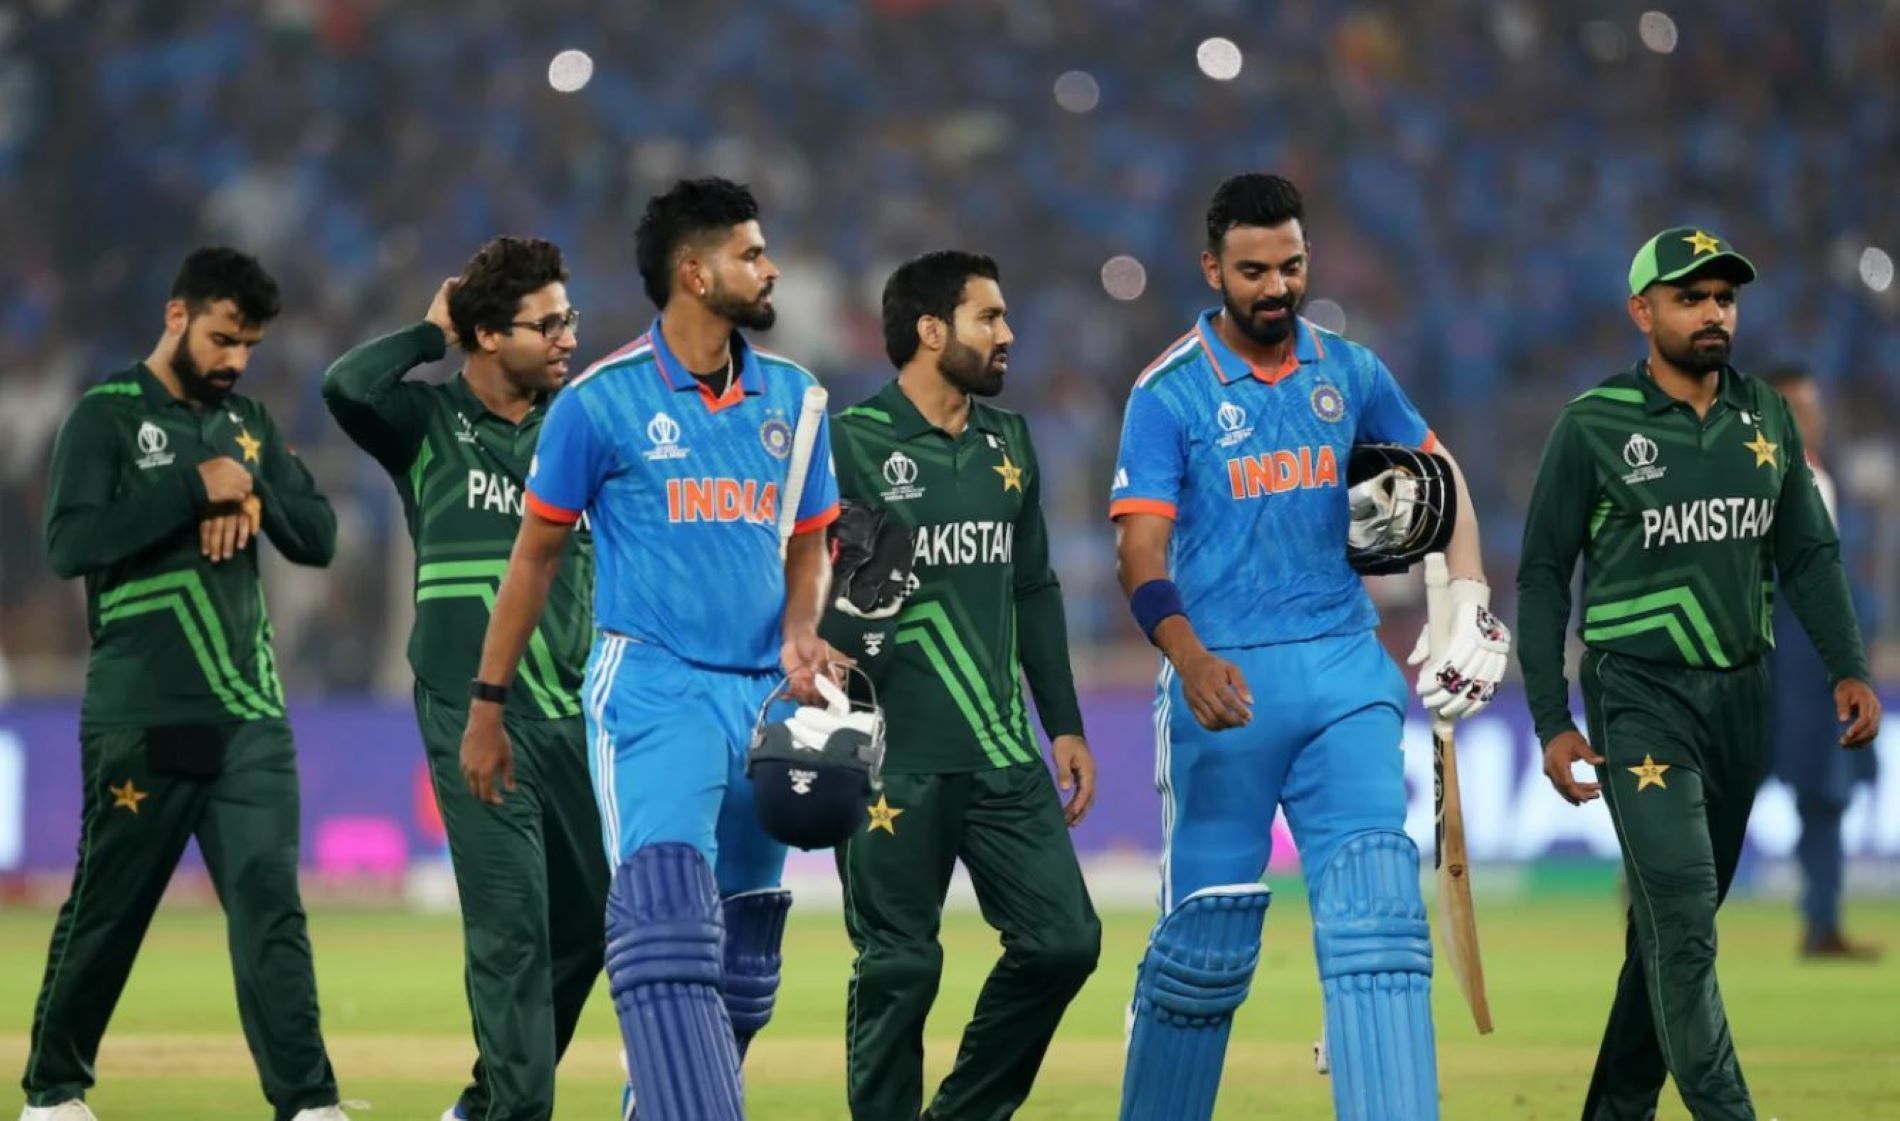 India hardly broke a sweat in brushing aside Pakistan at Ahmedabad